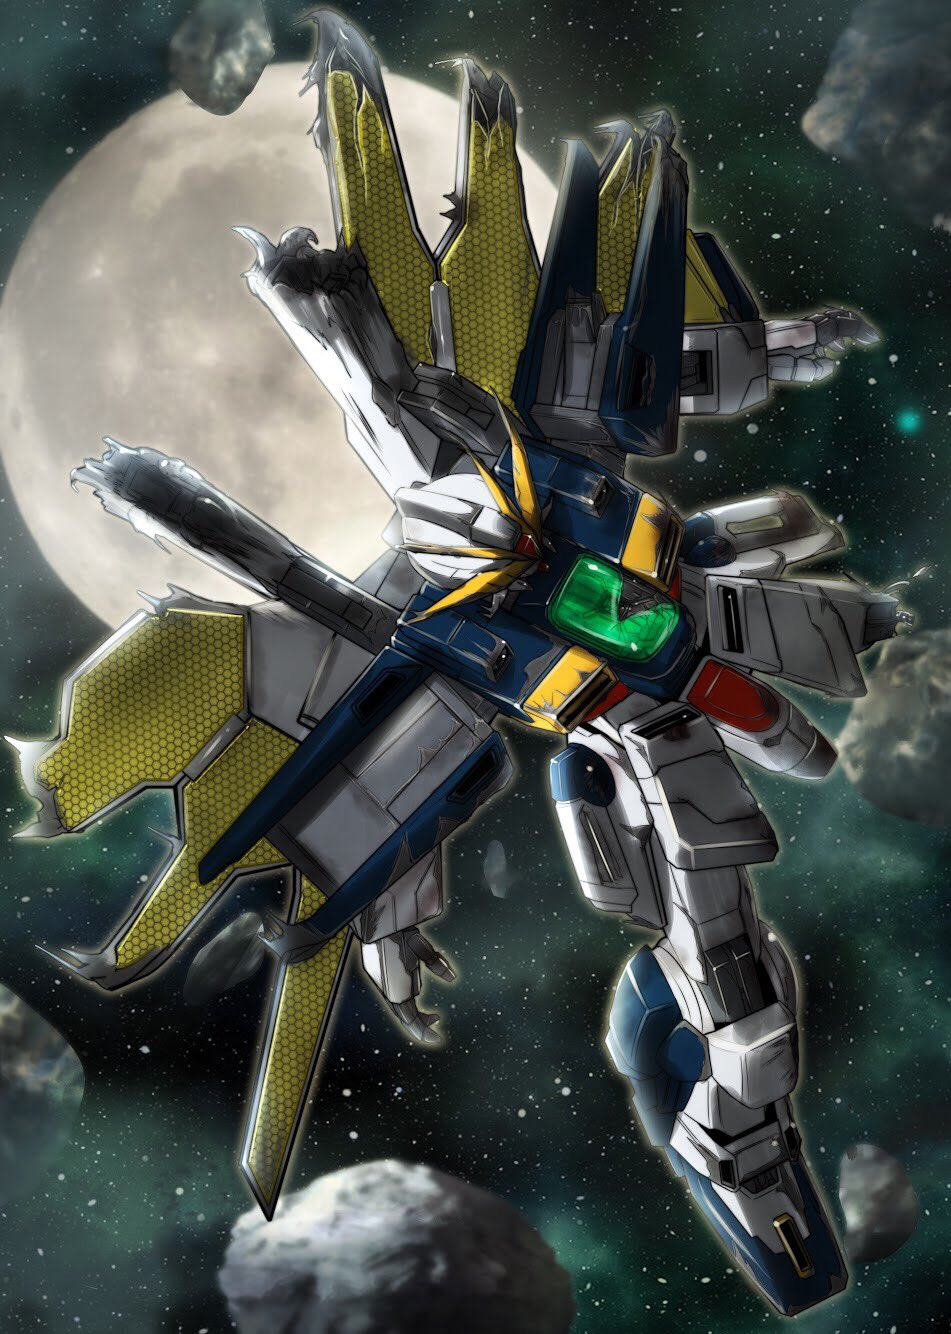 GX 9901 DX Gundam Double X Shinseiki Gundam X Anime Image Board